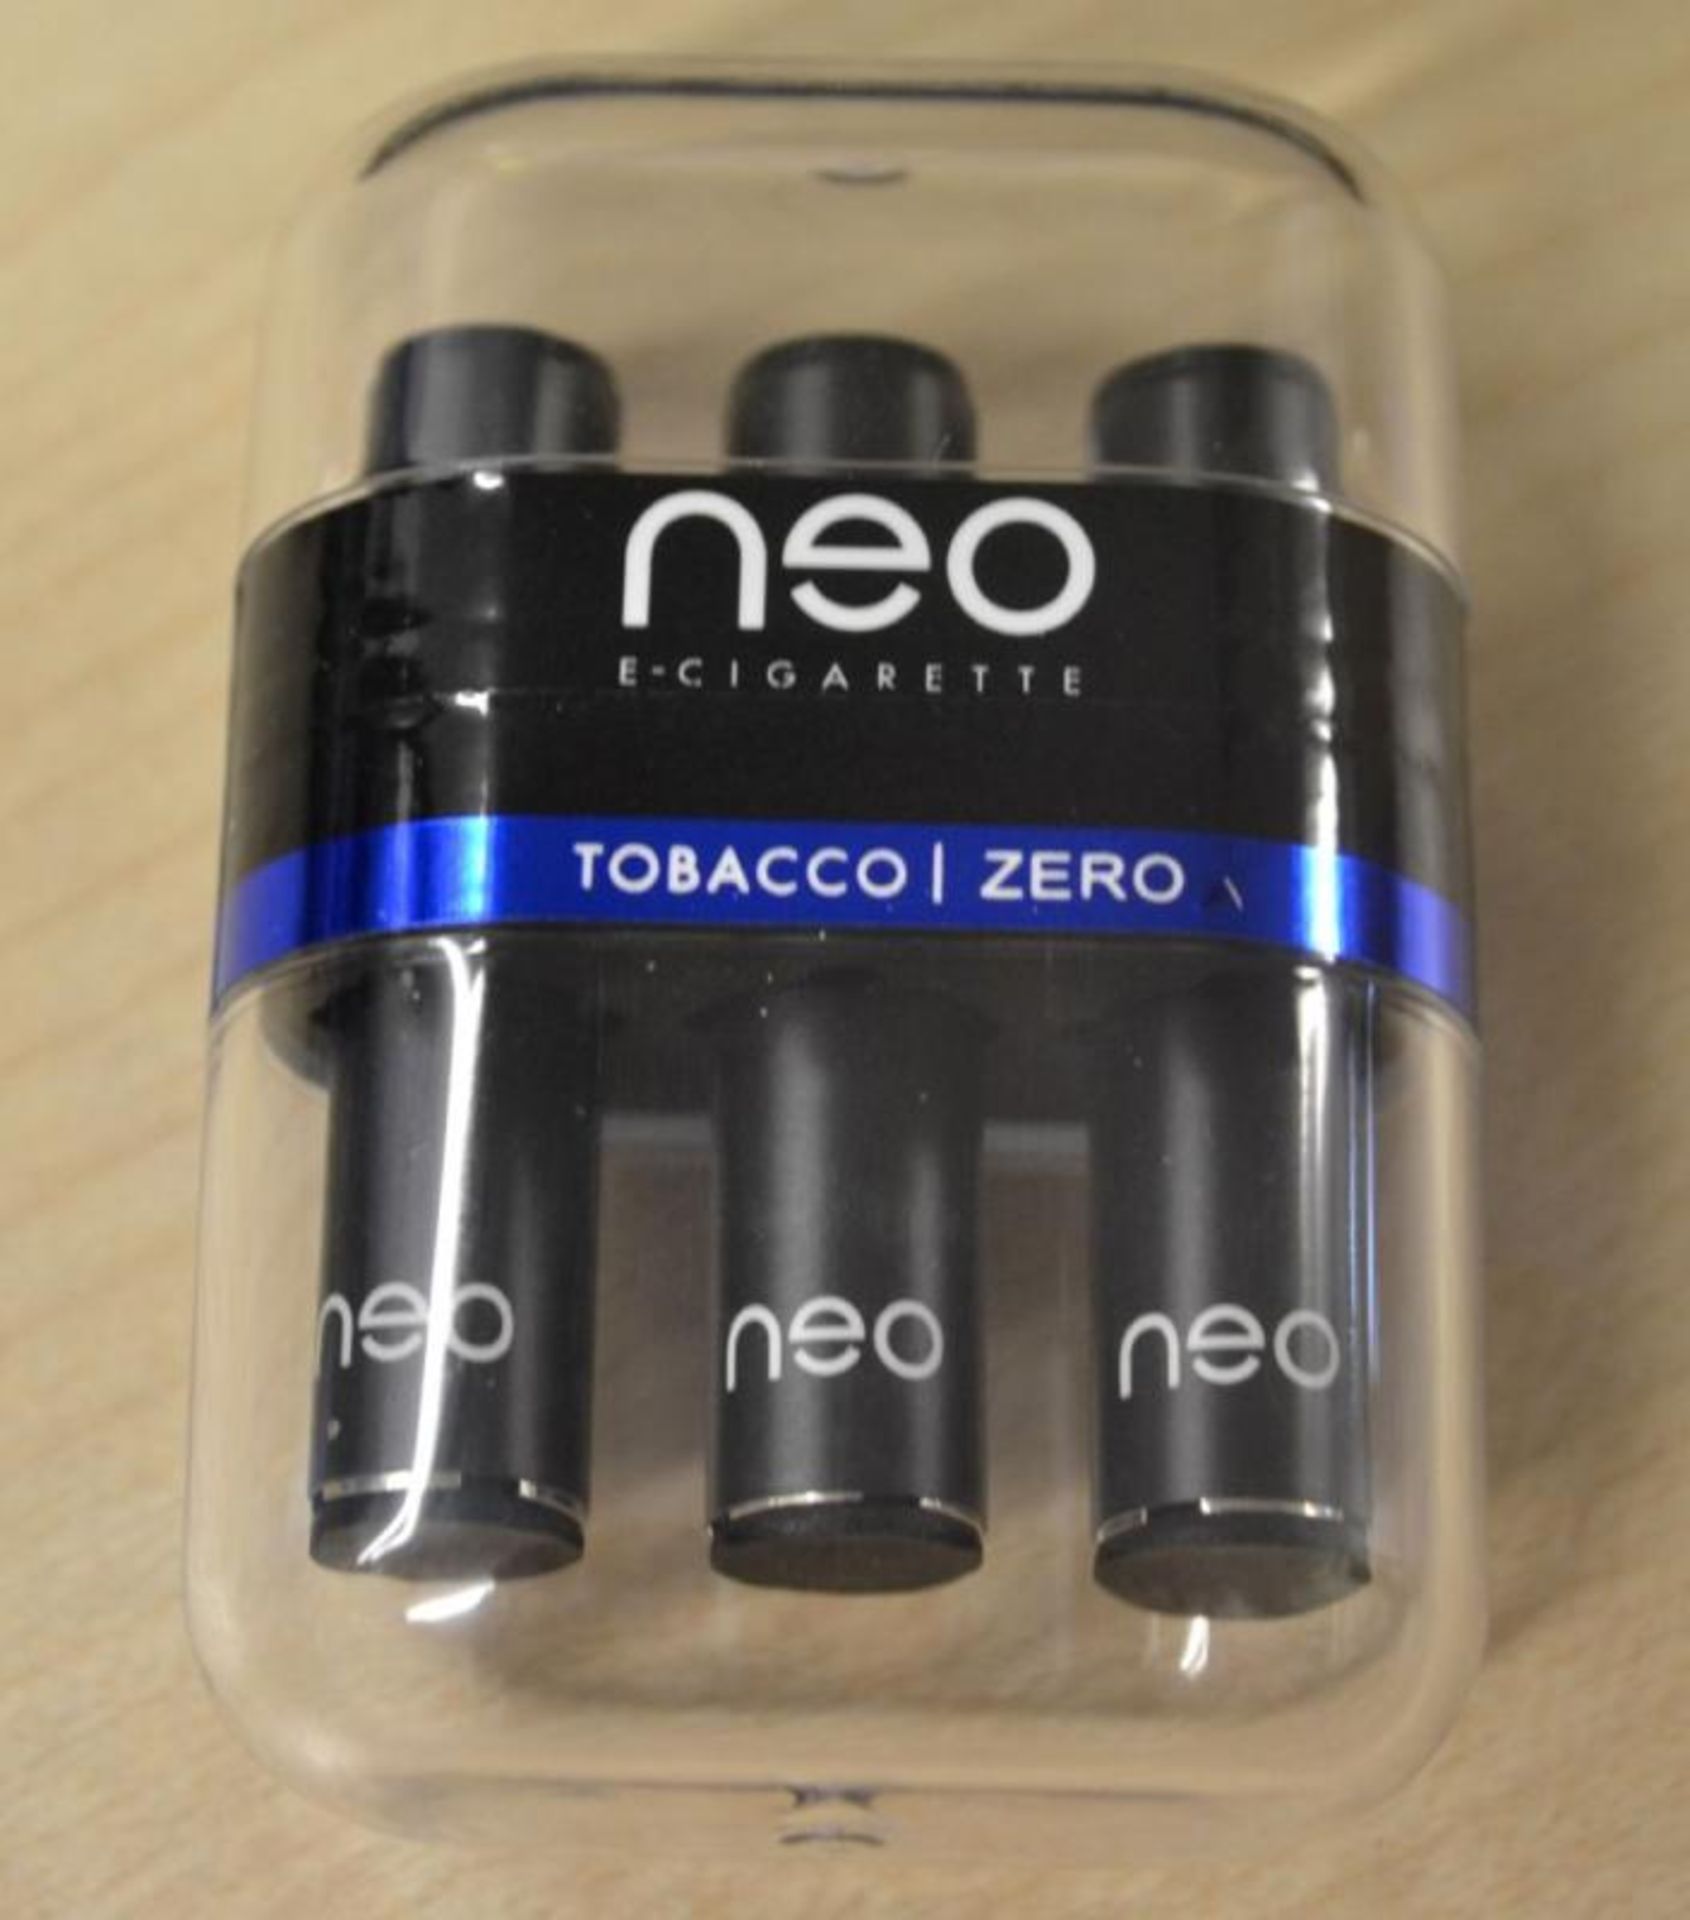 30 x Neo E-Cigarettes Neo Infinity Tobacco Zero Refill Packs - New & Sealed Stock - CL185 - Ref: DRT - Image 2 of 9